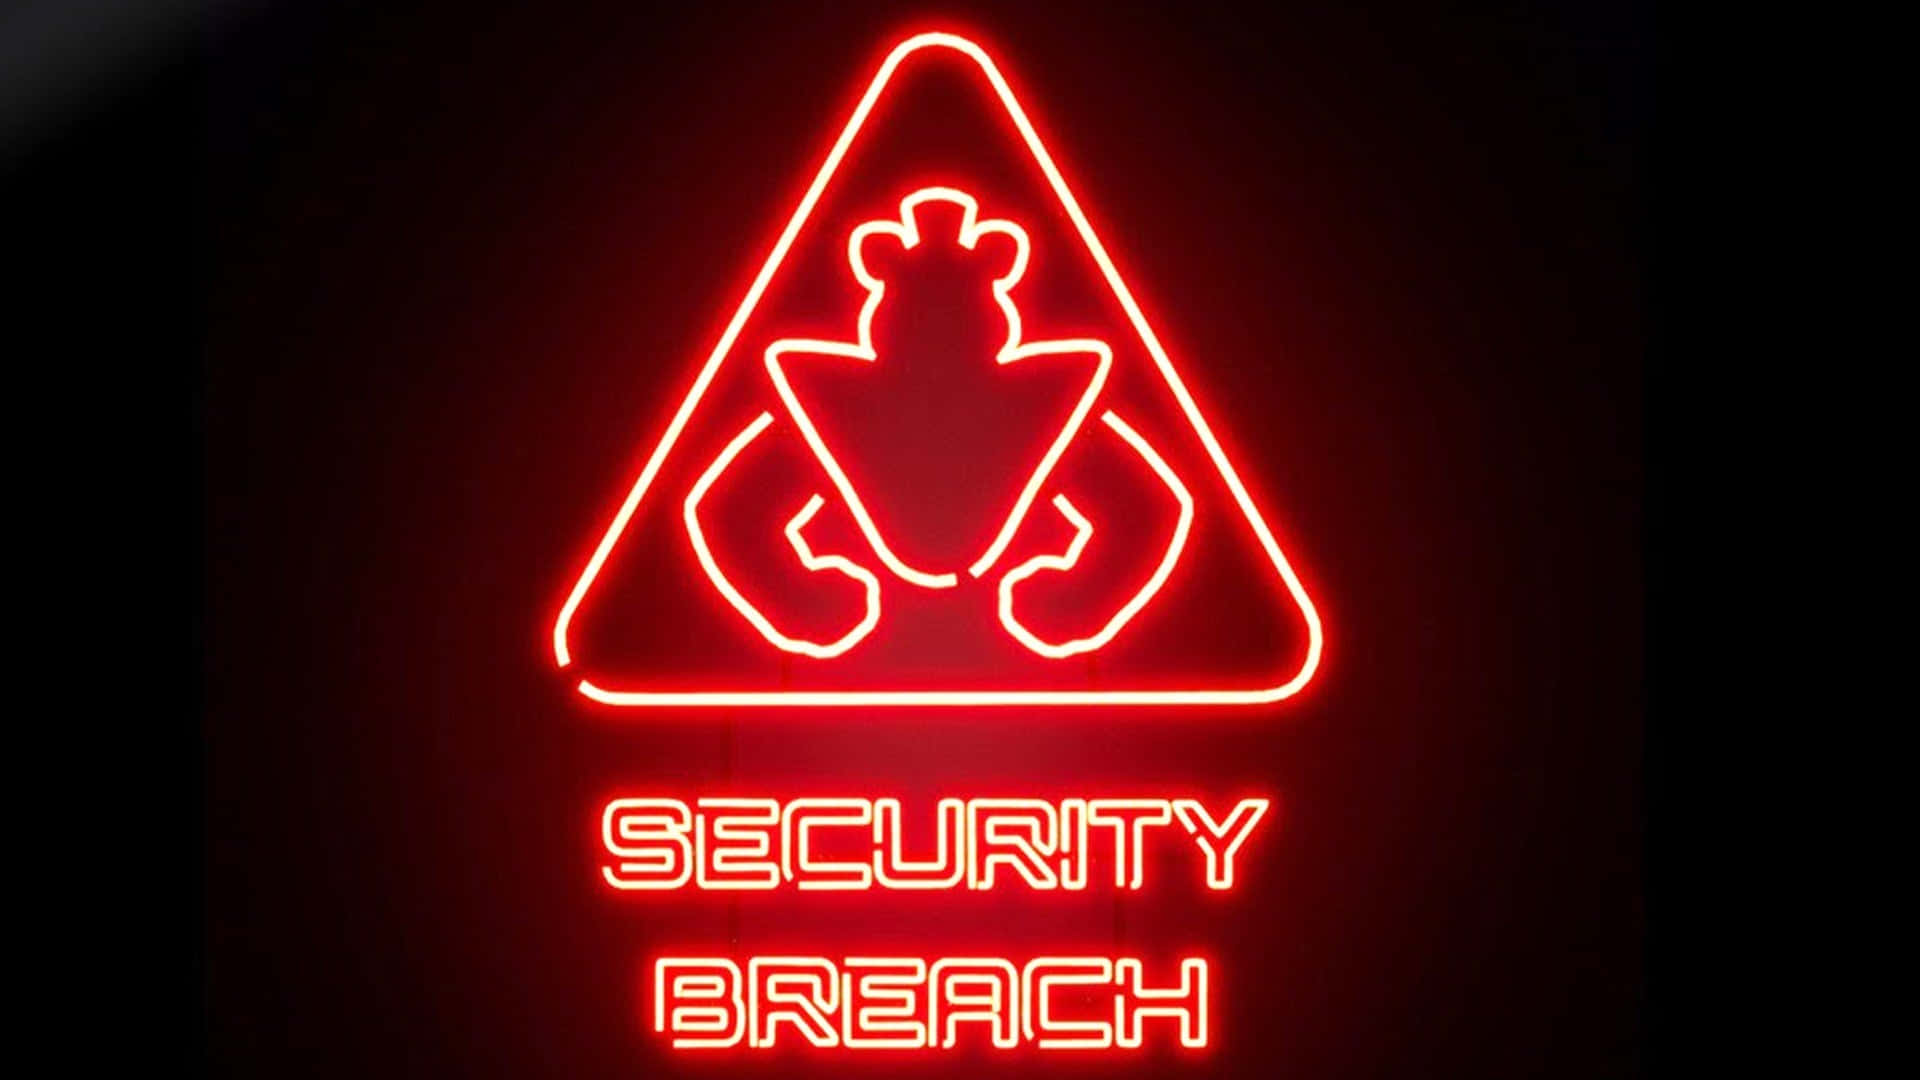 HD security breach wallpapers  Peakpx